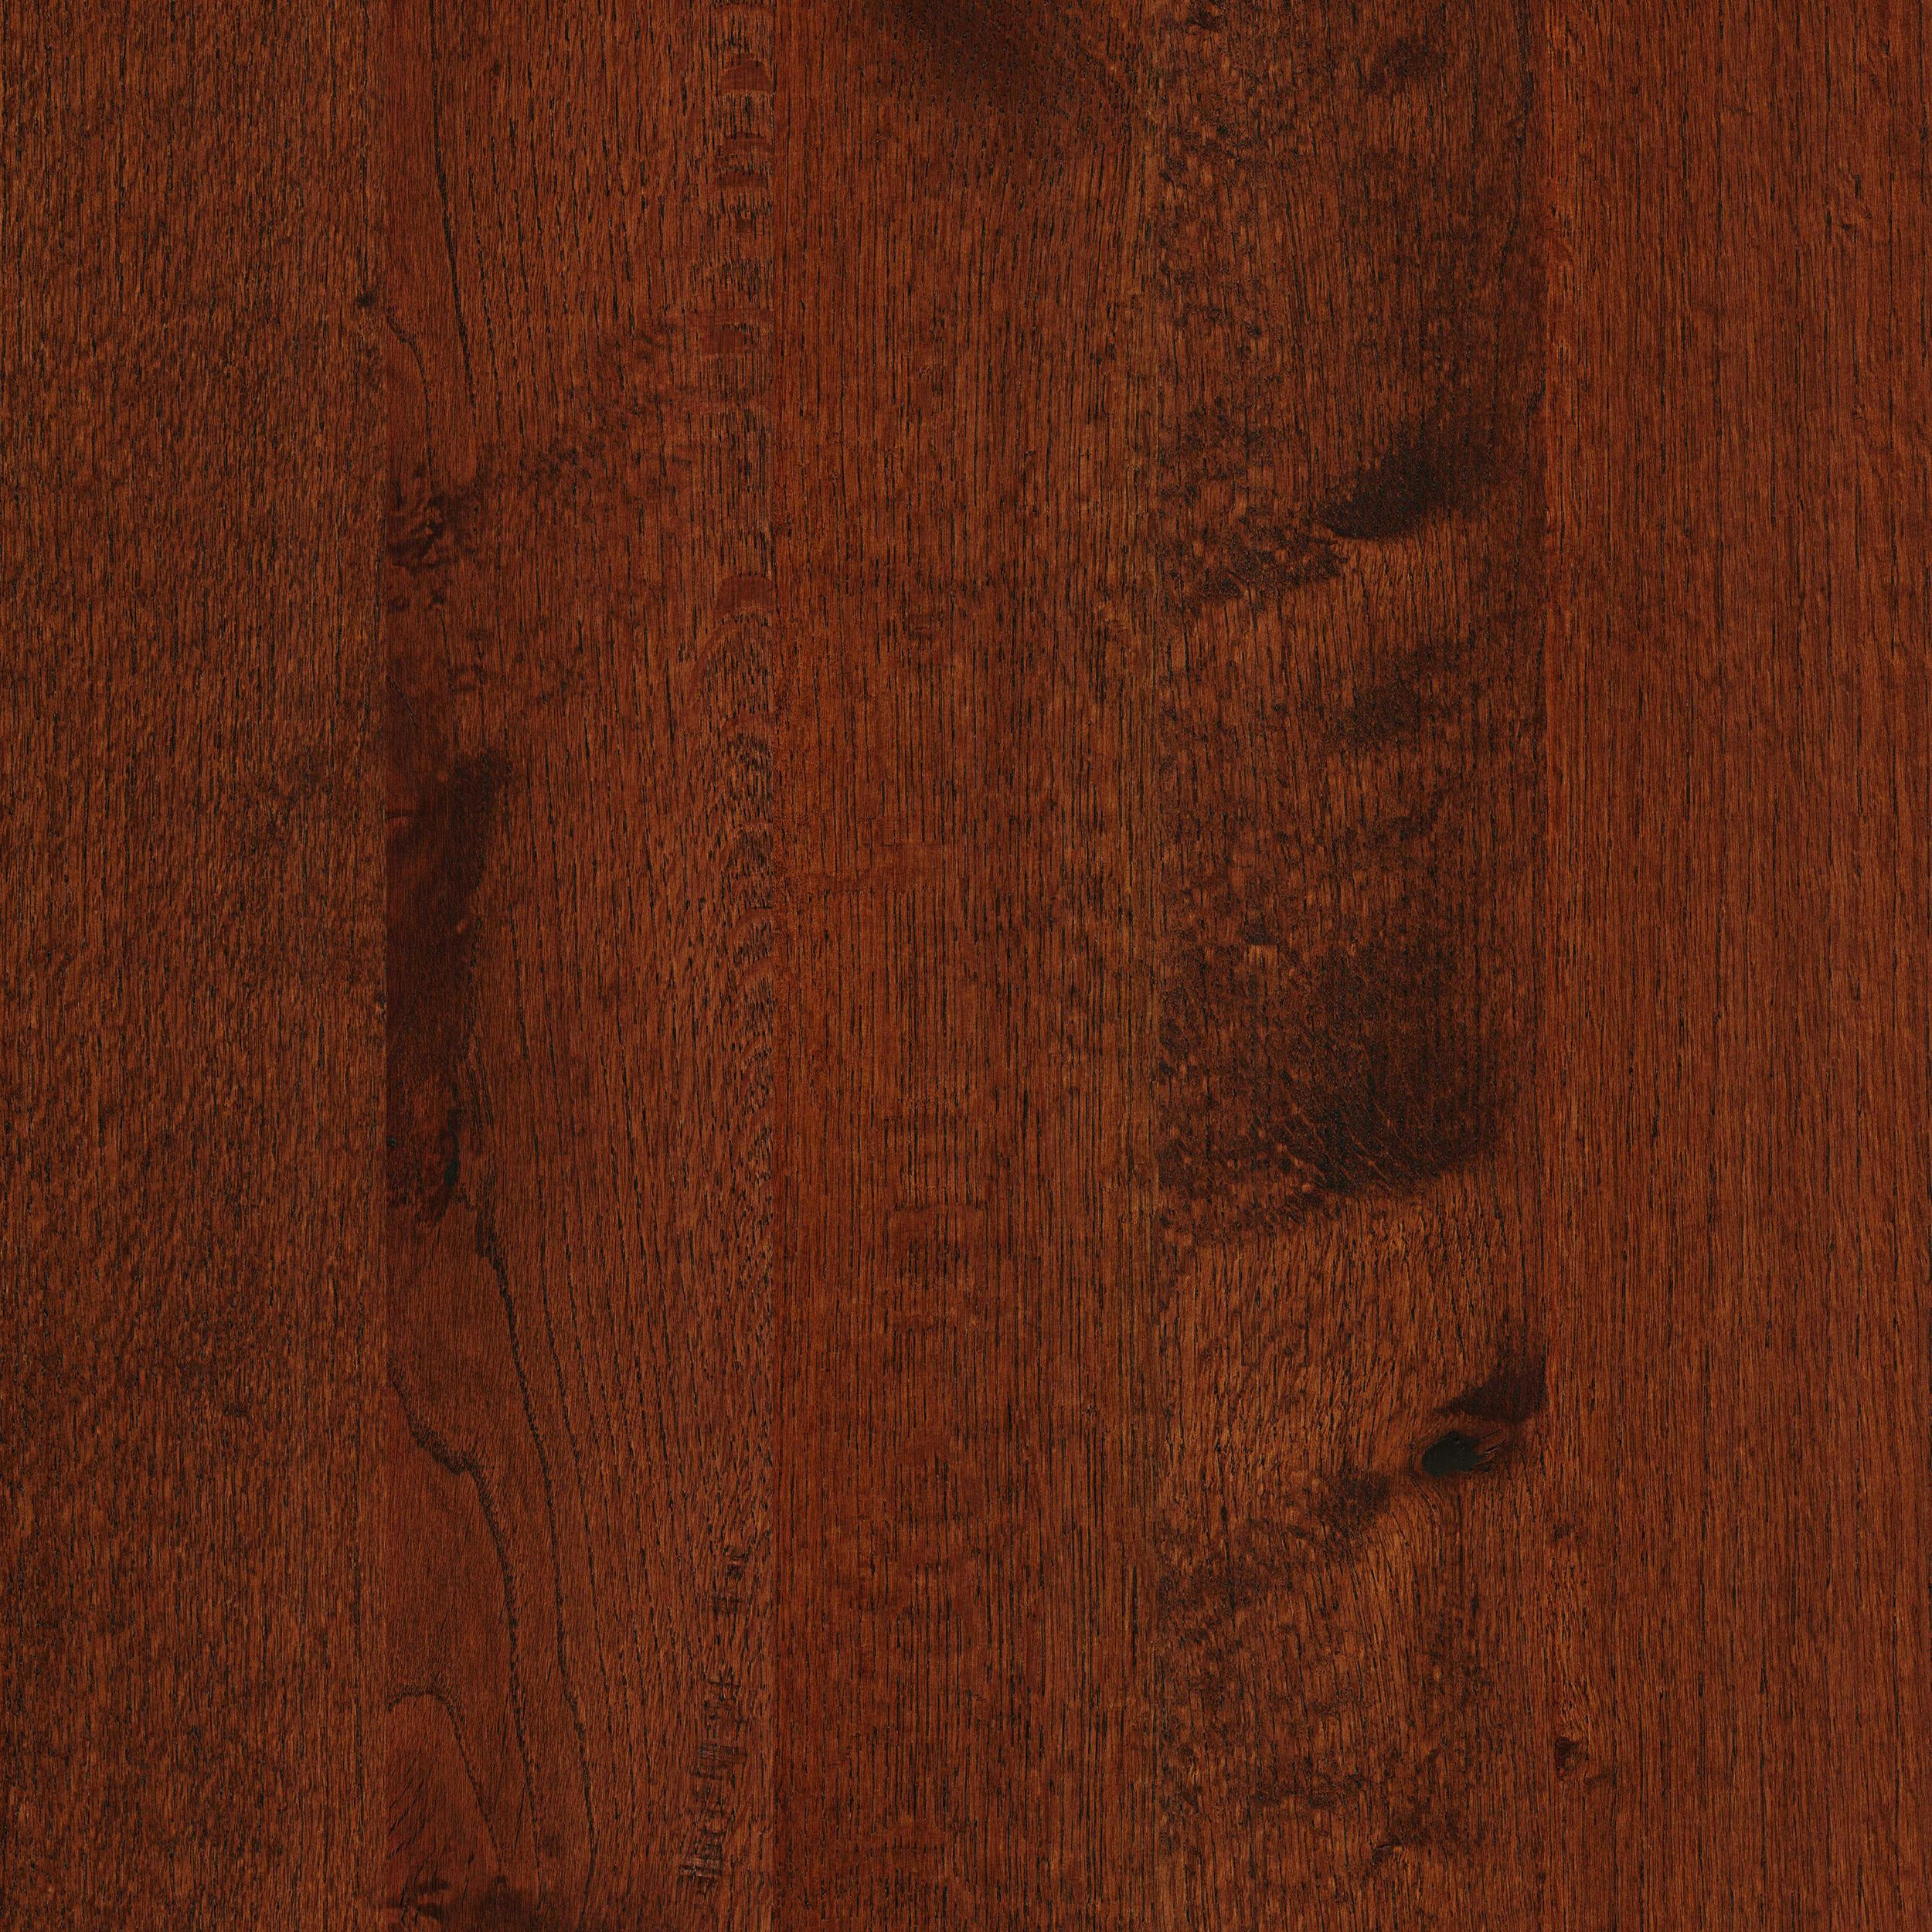 beveled edge hardwood flooring of timber hardwood red oak sorrell 5 wide solid hardwood flooring in red oak sorrell timber solid approved bk